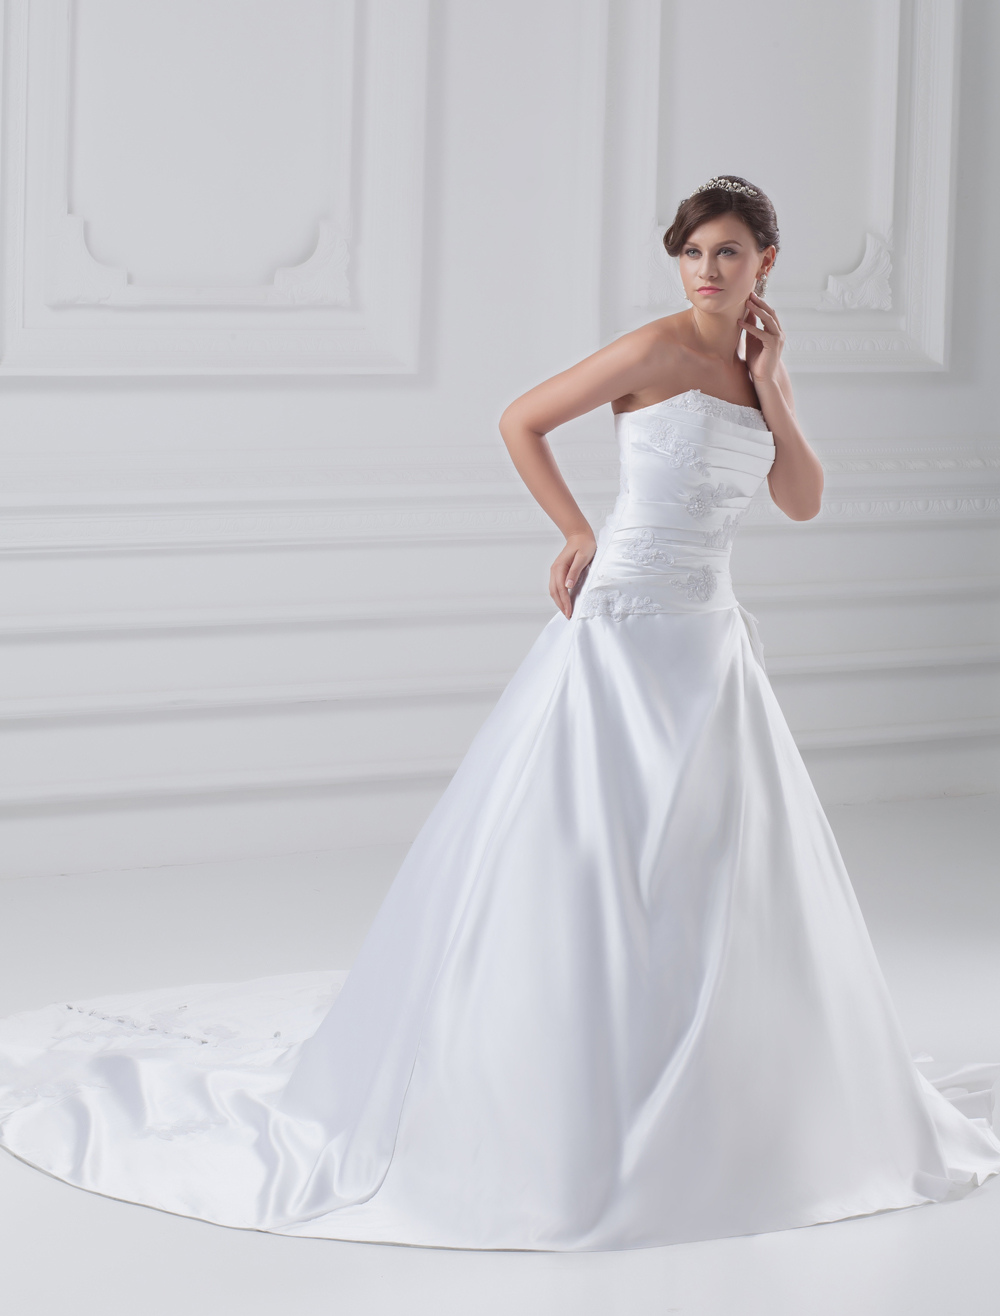 White Ball Gown Beading Satin Wedding Dress For Bride - Milanoo.com